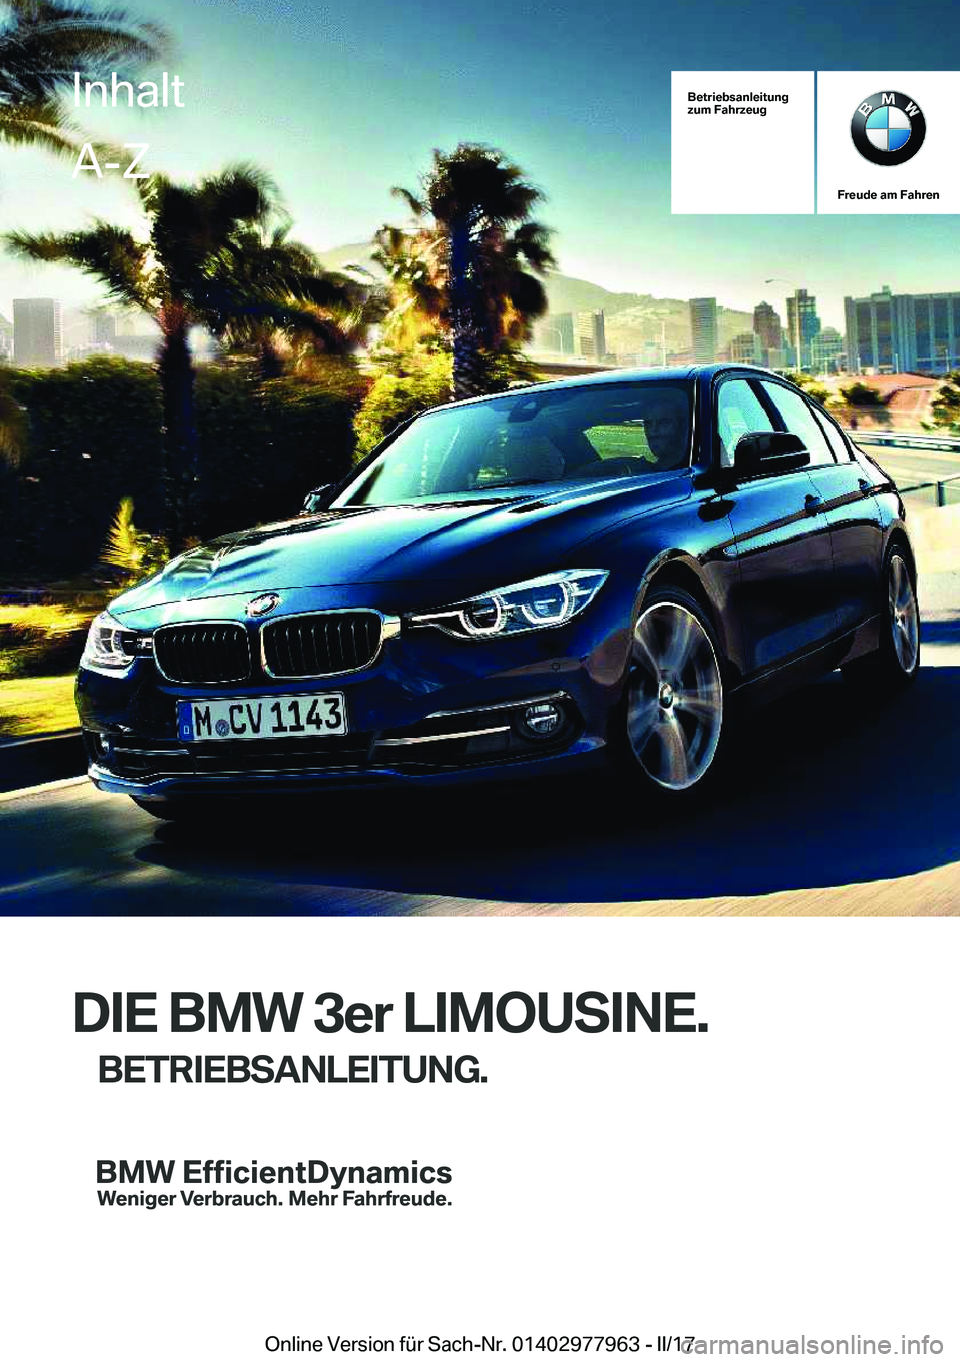 BMW 3 SERIES 2017  Betriebsanleitungen (in German) �B�e�t�r�i�e�b�s�a�n�l�e�i�t�u�n�g
�z�u�m��F�a�h�r�z�e�u�g
�F�r�e�u�d�e��a�m��F�a�h�r�e�n
�D�I�E��B�M�W��3�e�r��L�I�M�O�U�S�I�N�E�.
�B�E�T�R�I�E�B�S�A�N�L�E�I�T�U�N�G�.
�I�n�h�a�l�t�A�-�Z
�O�n�l